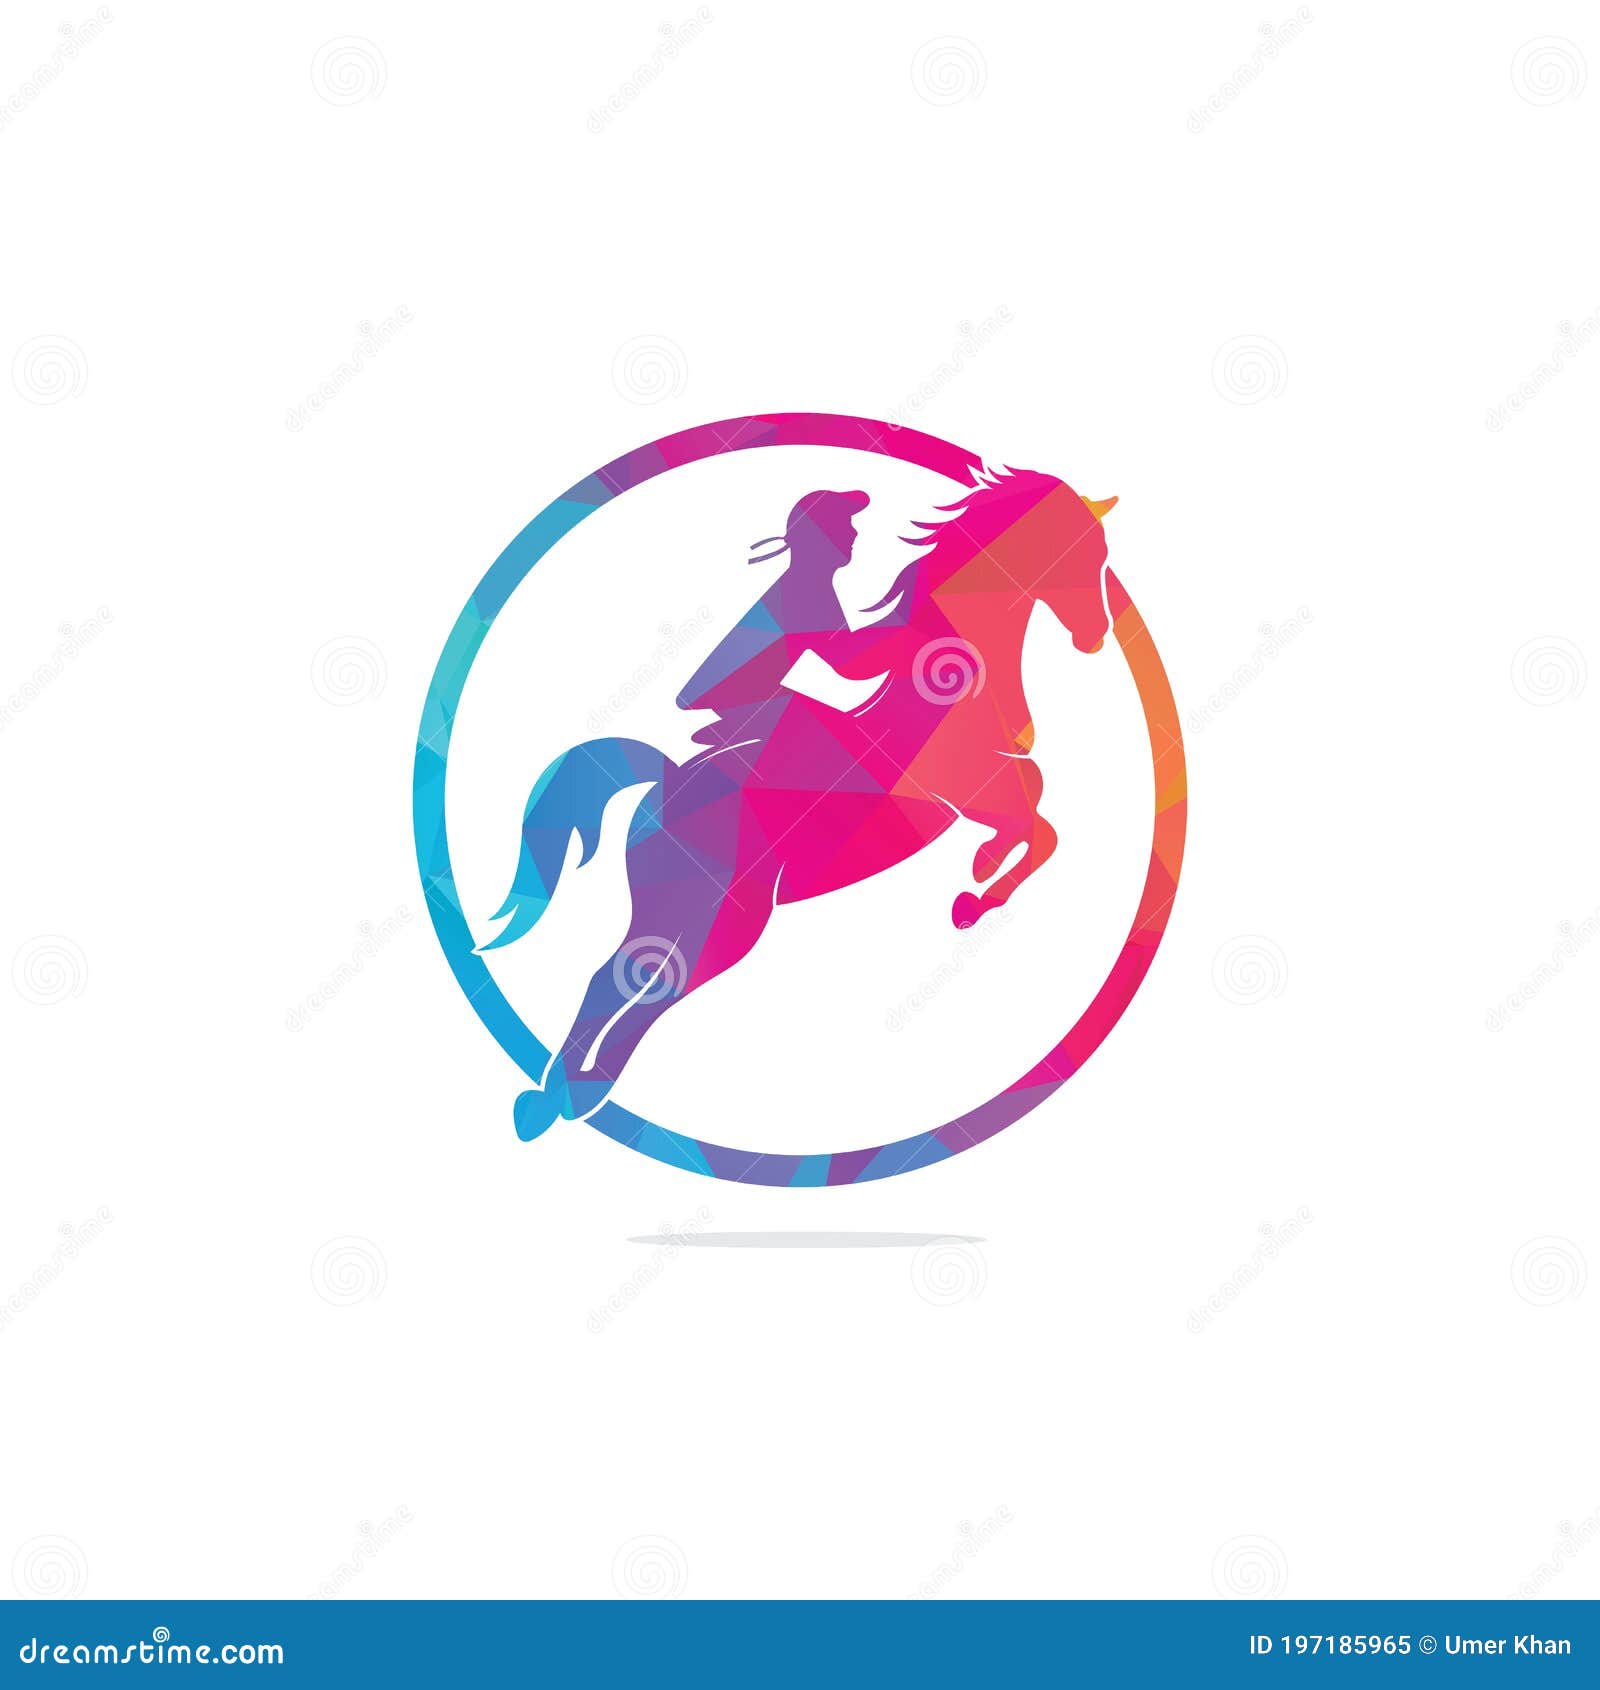 Racing Horse with Jockey Logo Design Icons. Stock Illustration ...